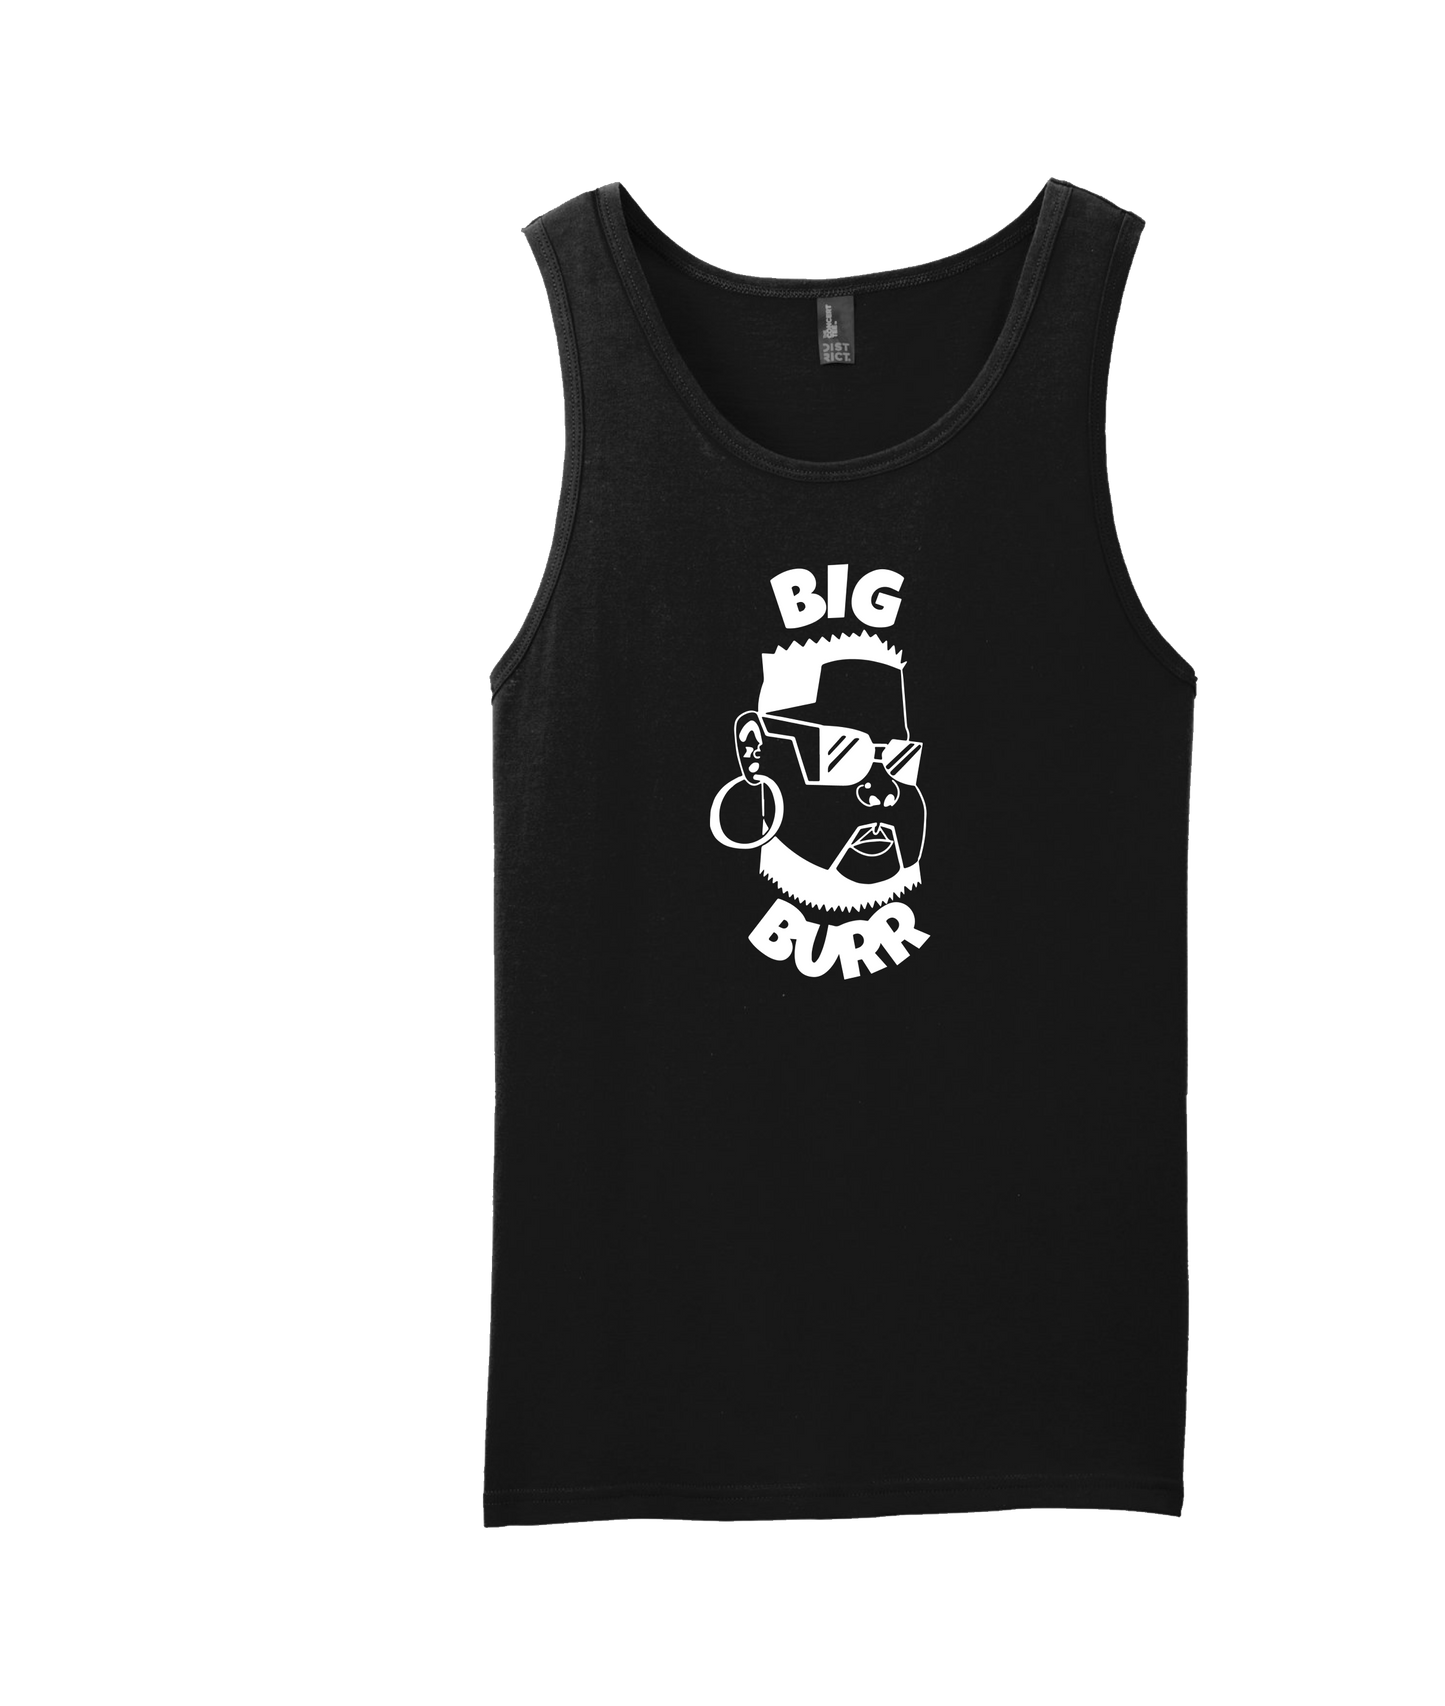 Big Burr - Black Tank Top